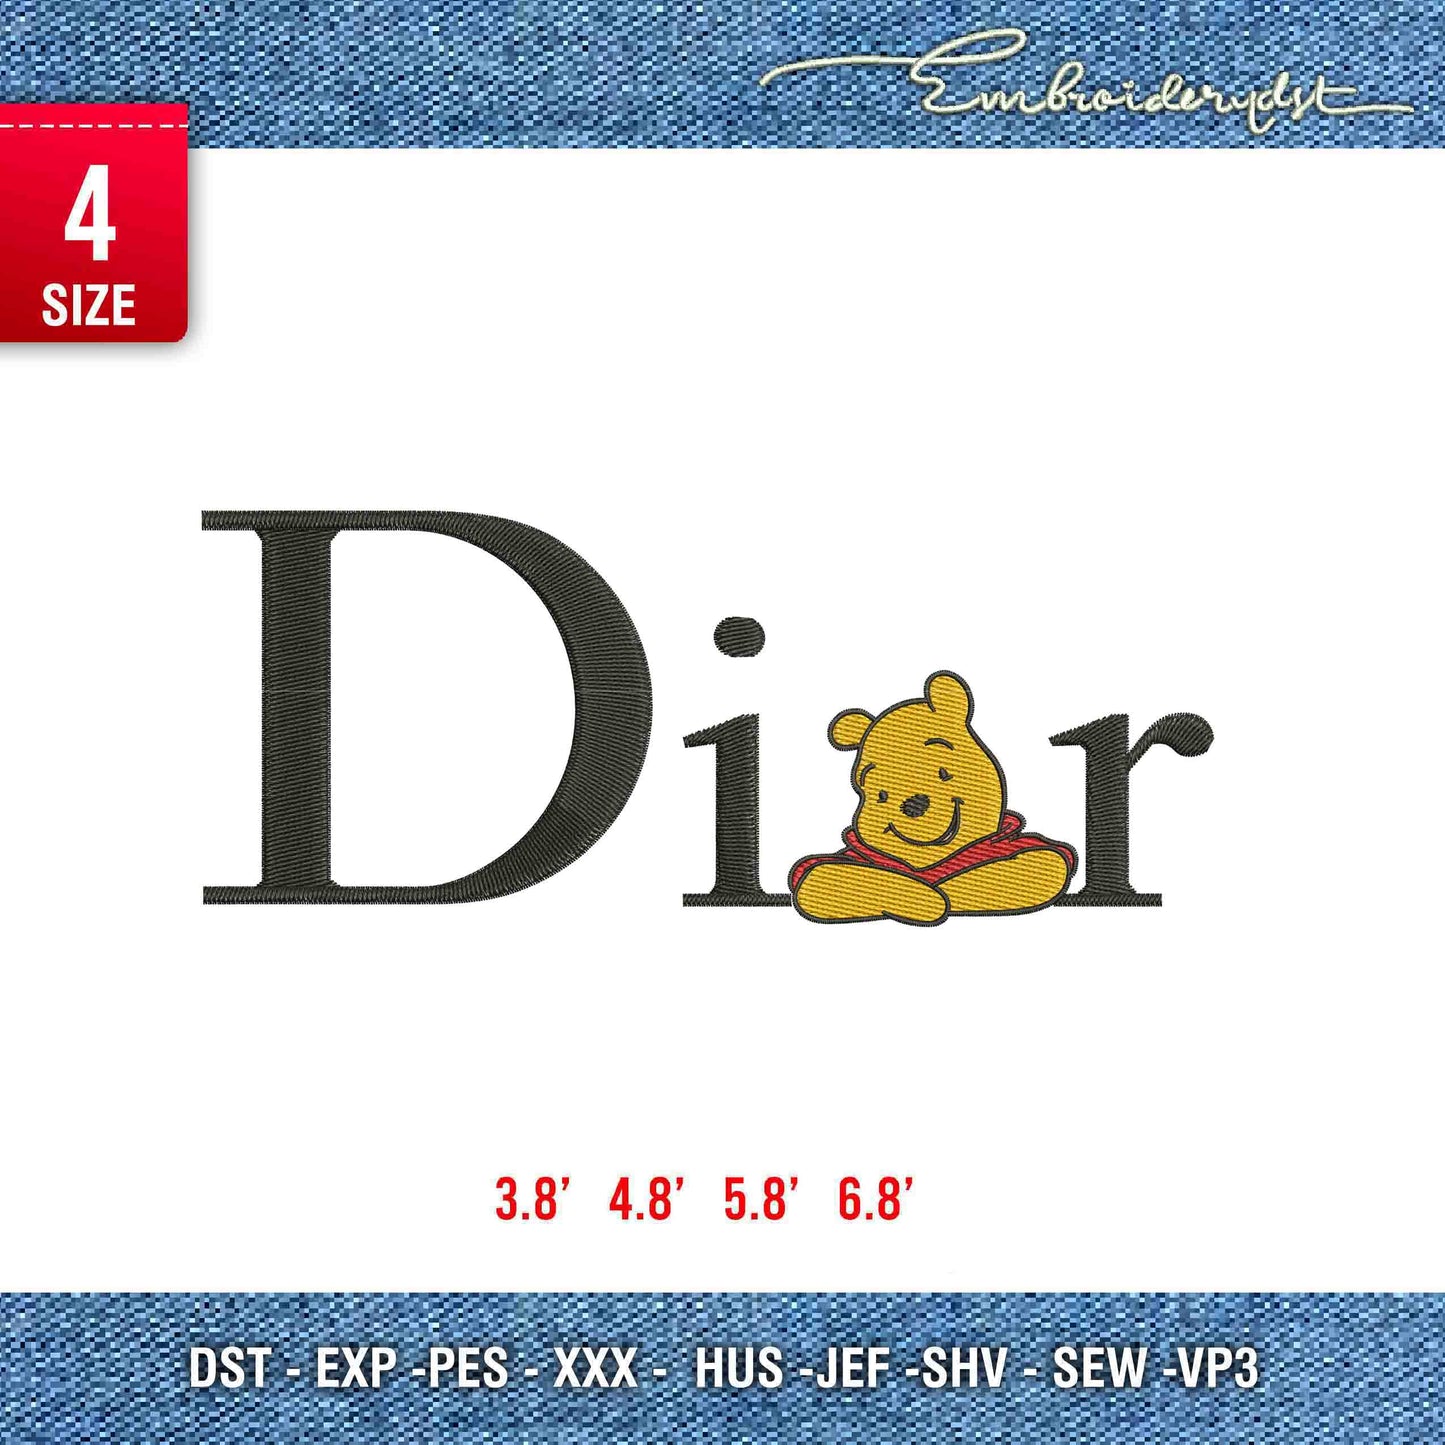 Dior Pooh